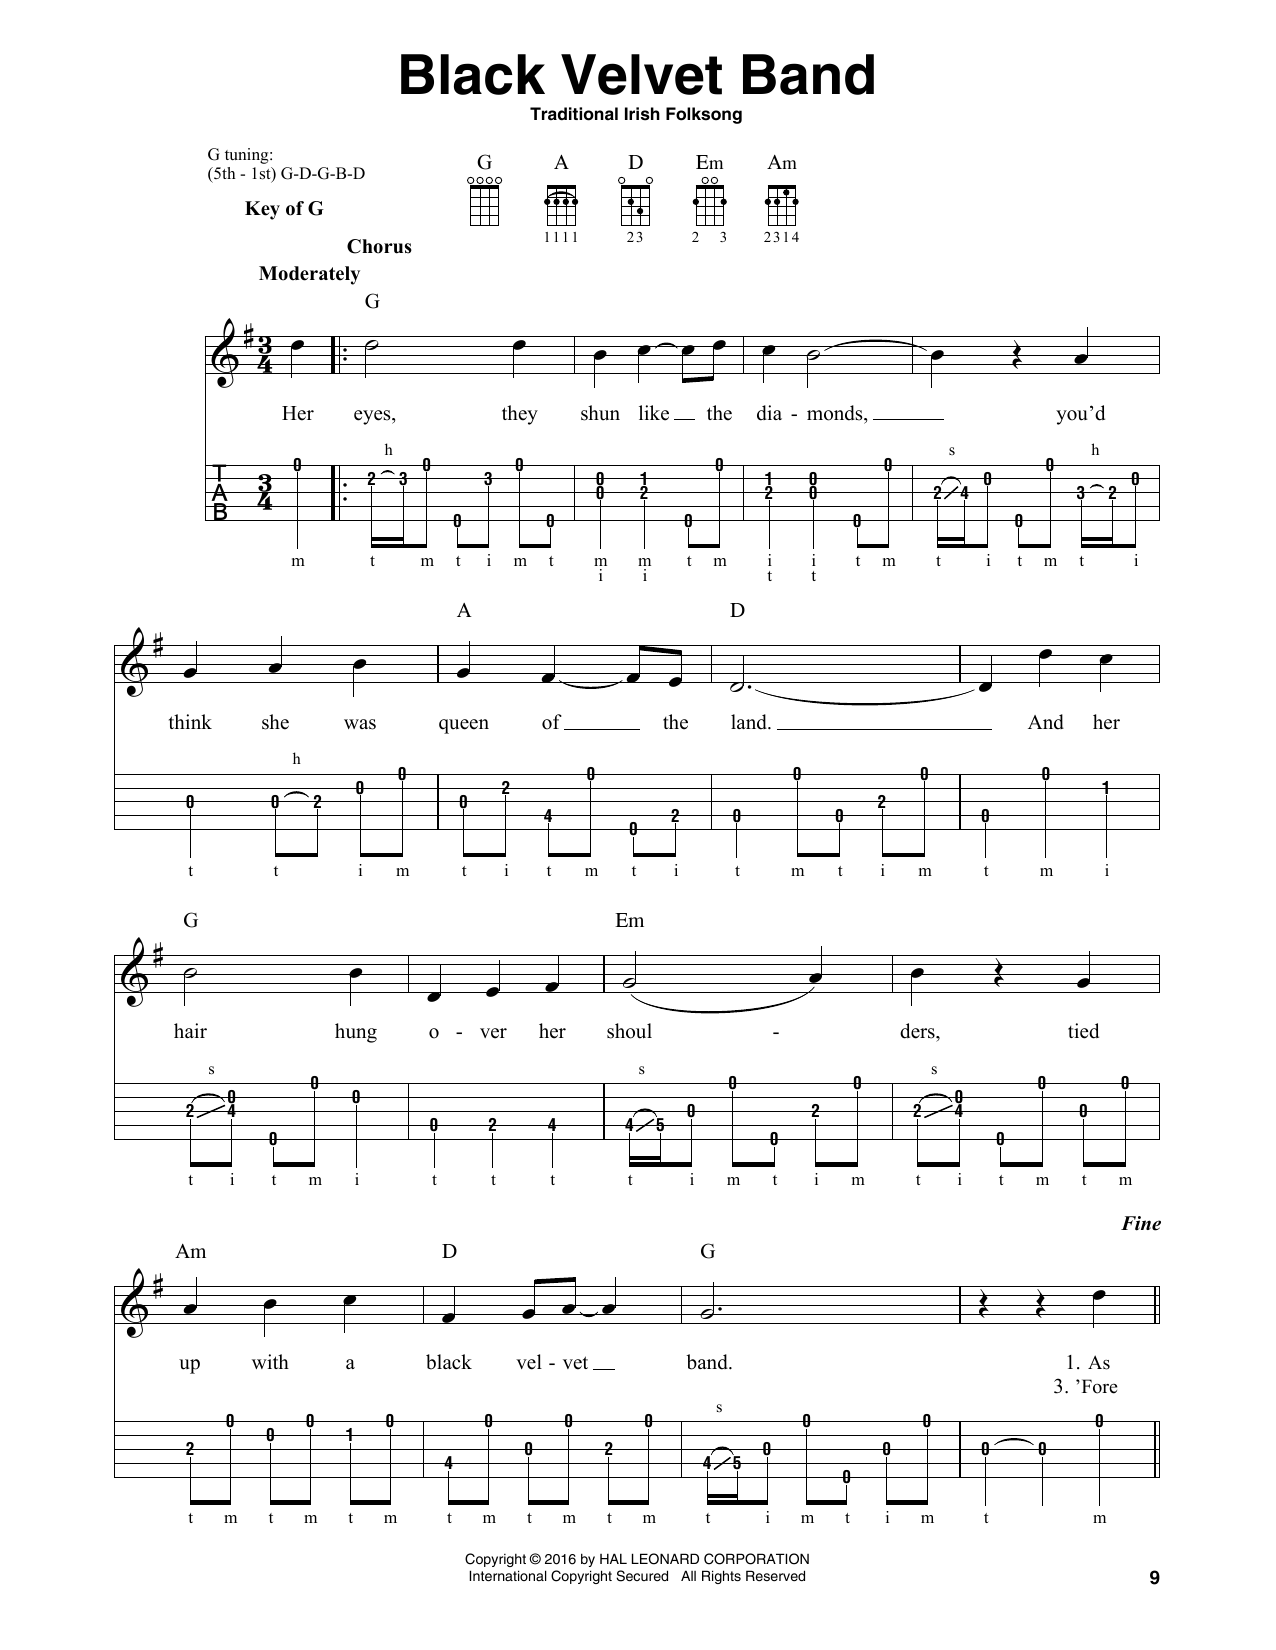 Traditional Irish Folk Song Black Velvet Band Sheet Music Notes & Chords for Banjo - Download or Print PDF